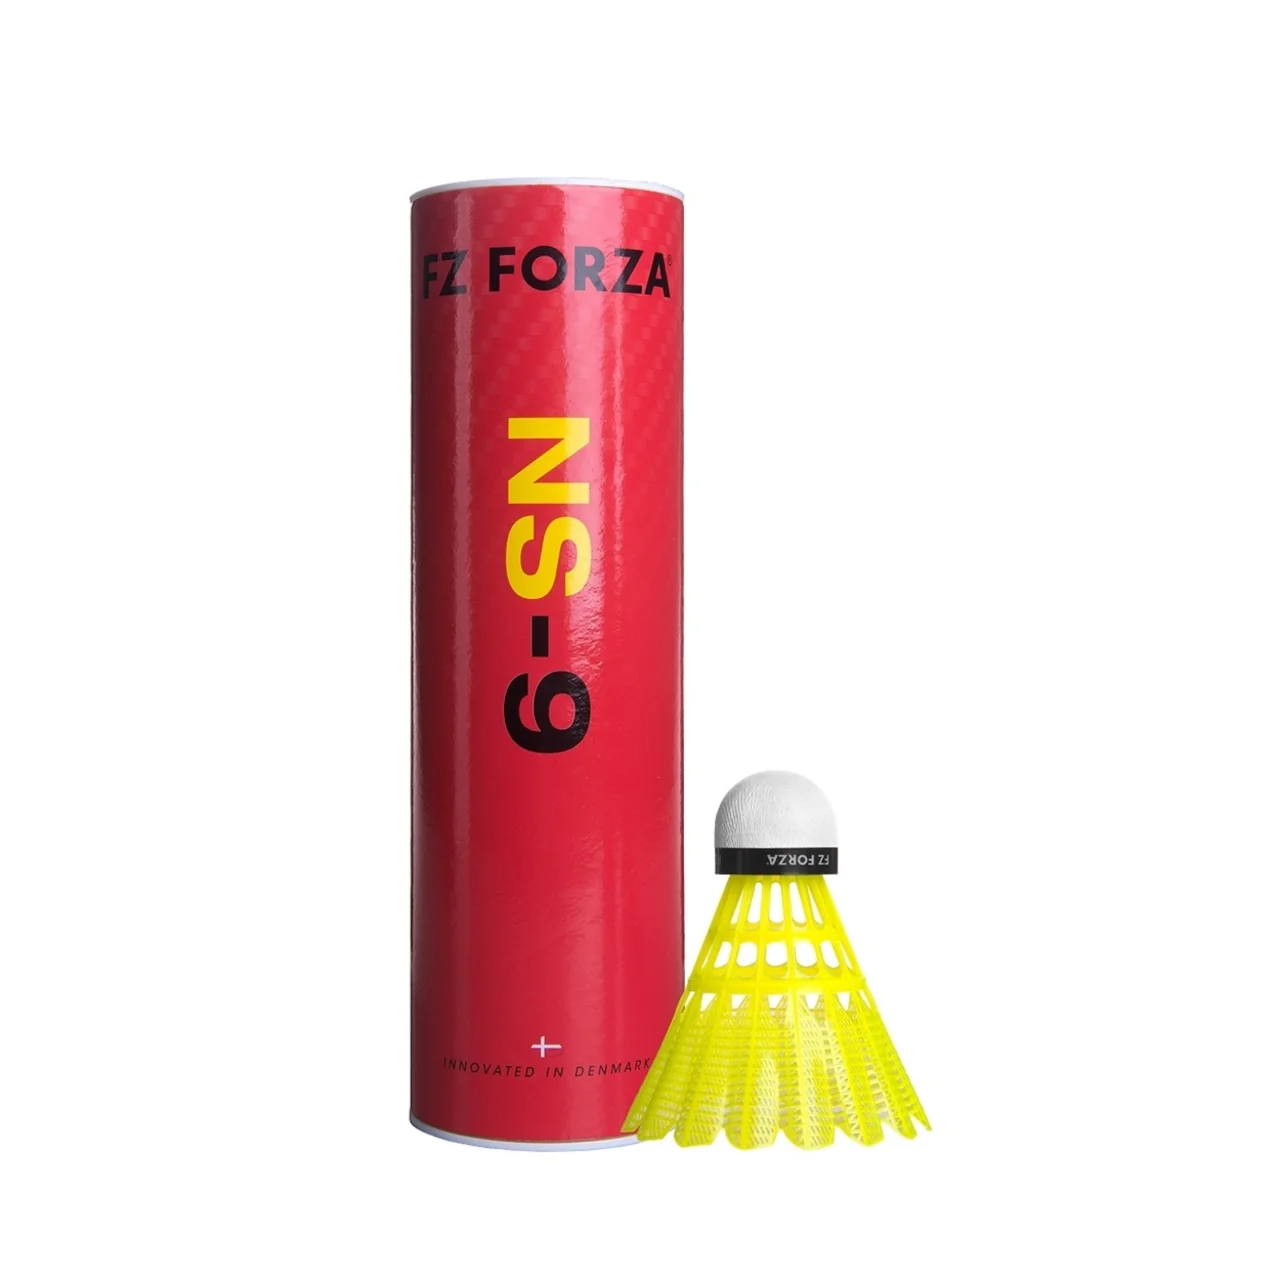 FZ Forza NS 9 1 rör (6 bollar)